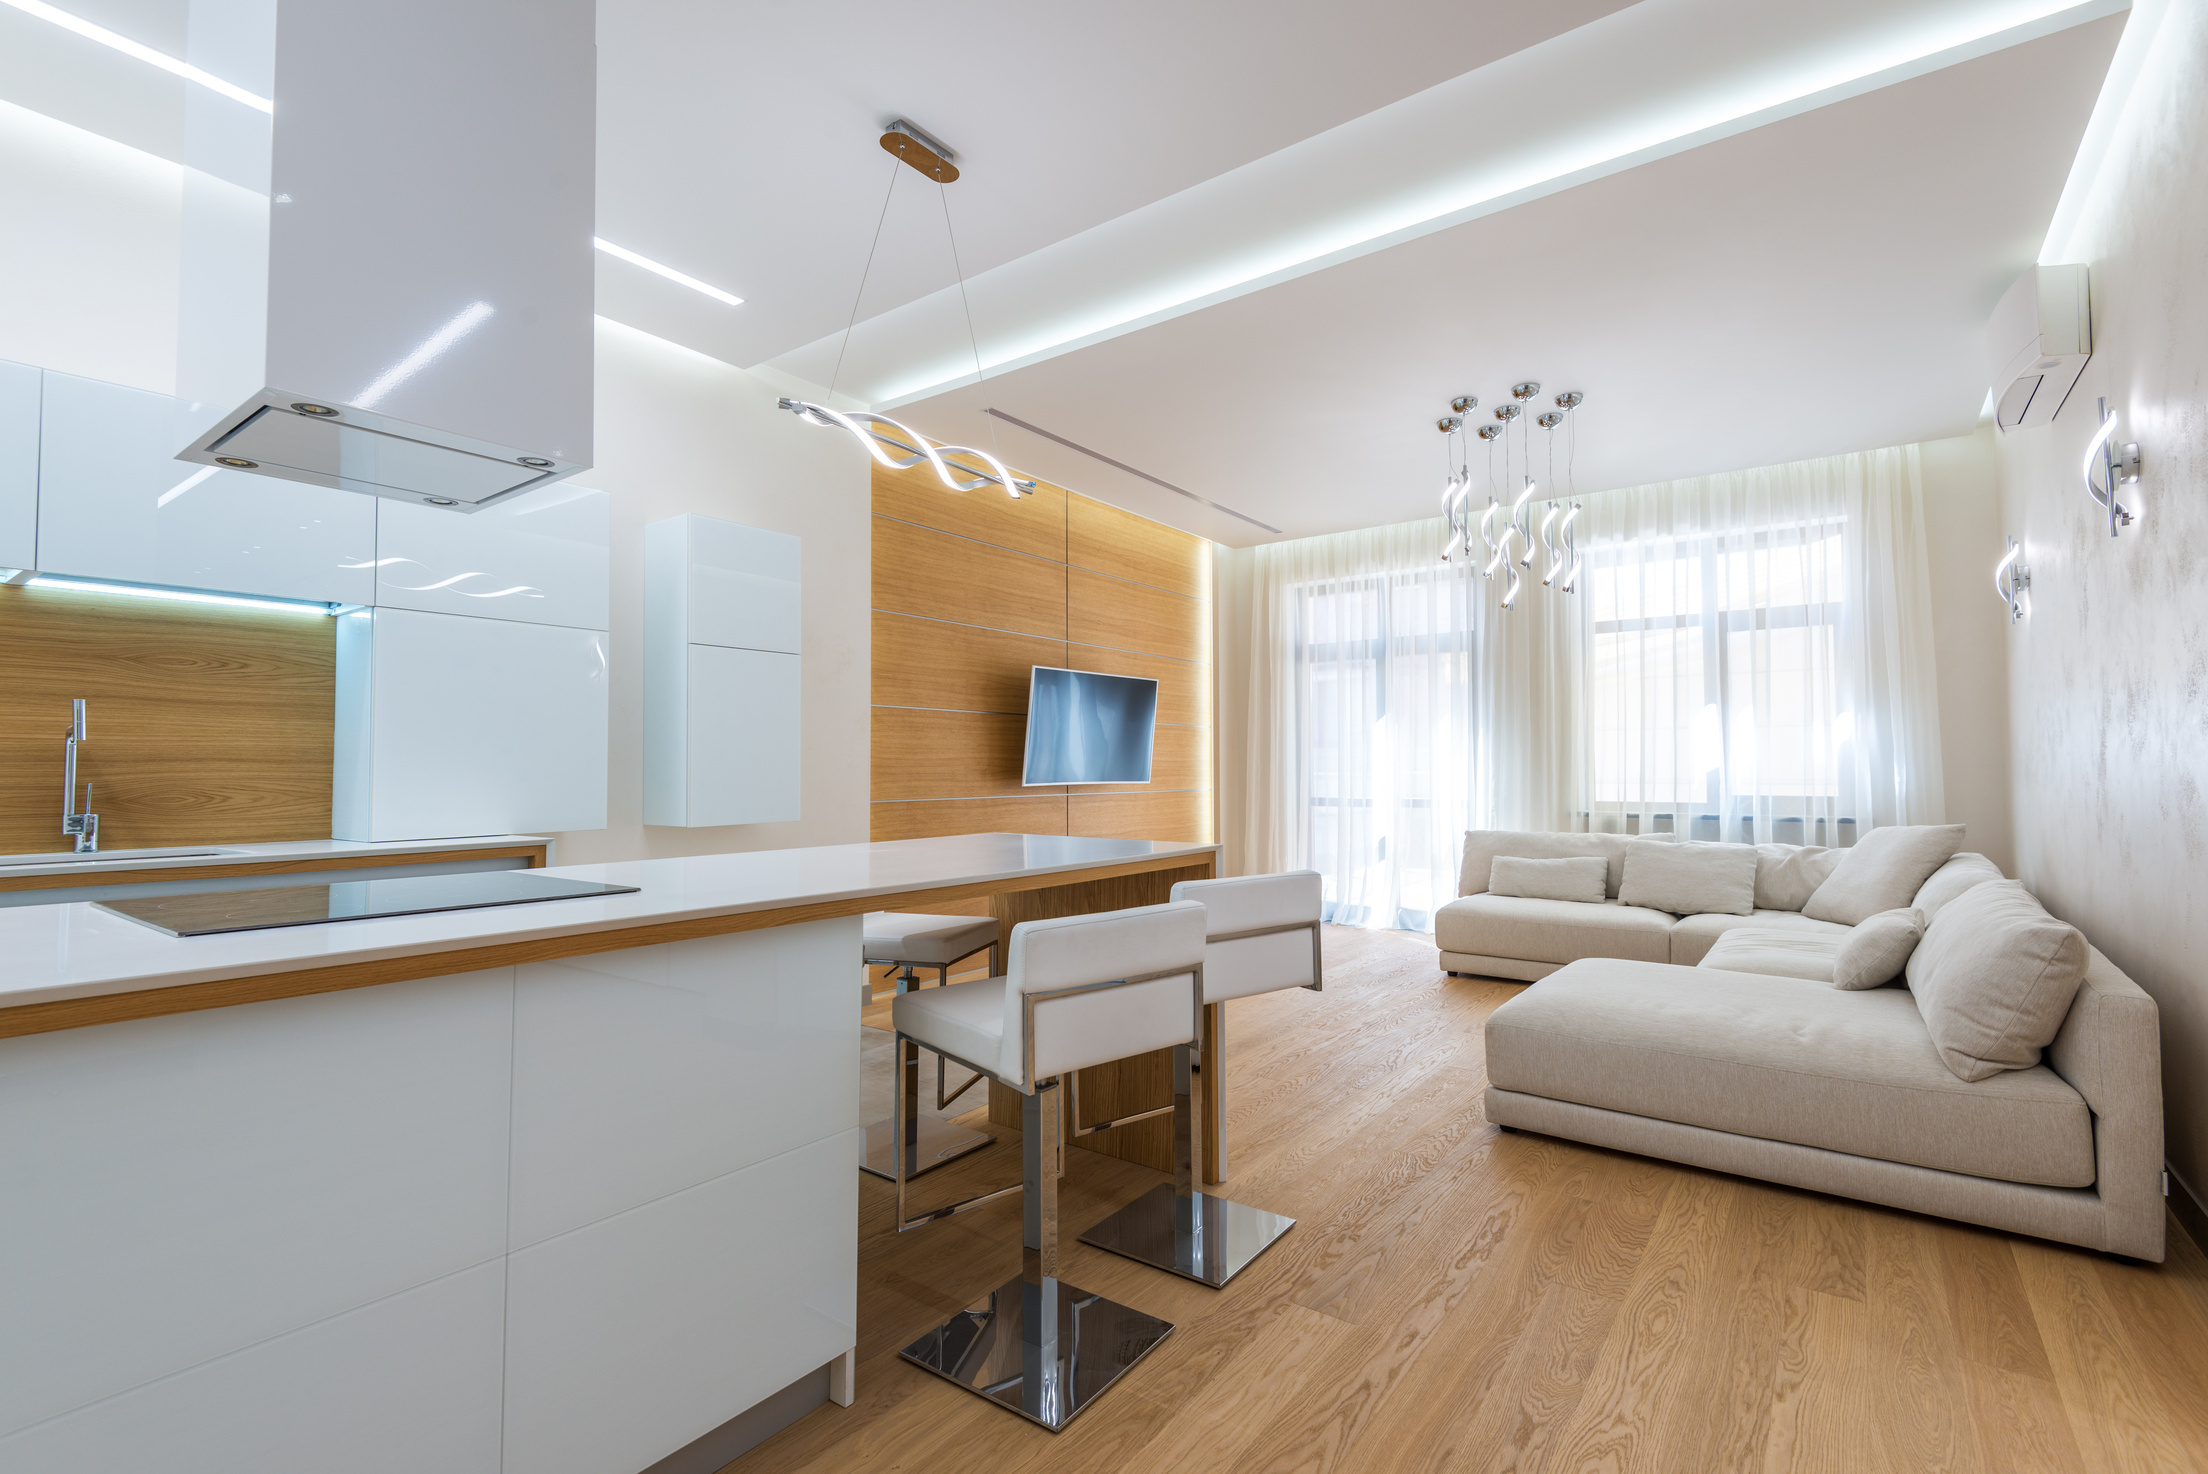 Luxury apartment with stylish interior